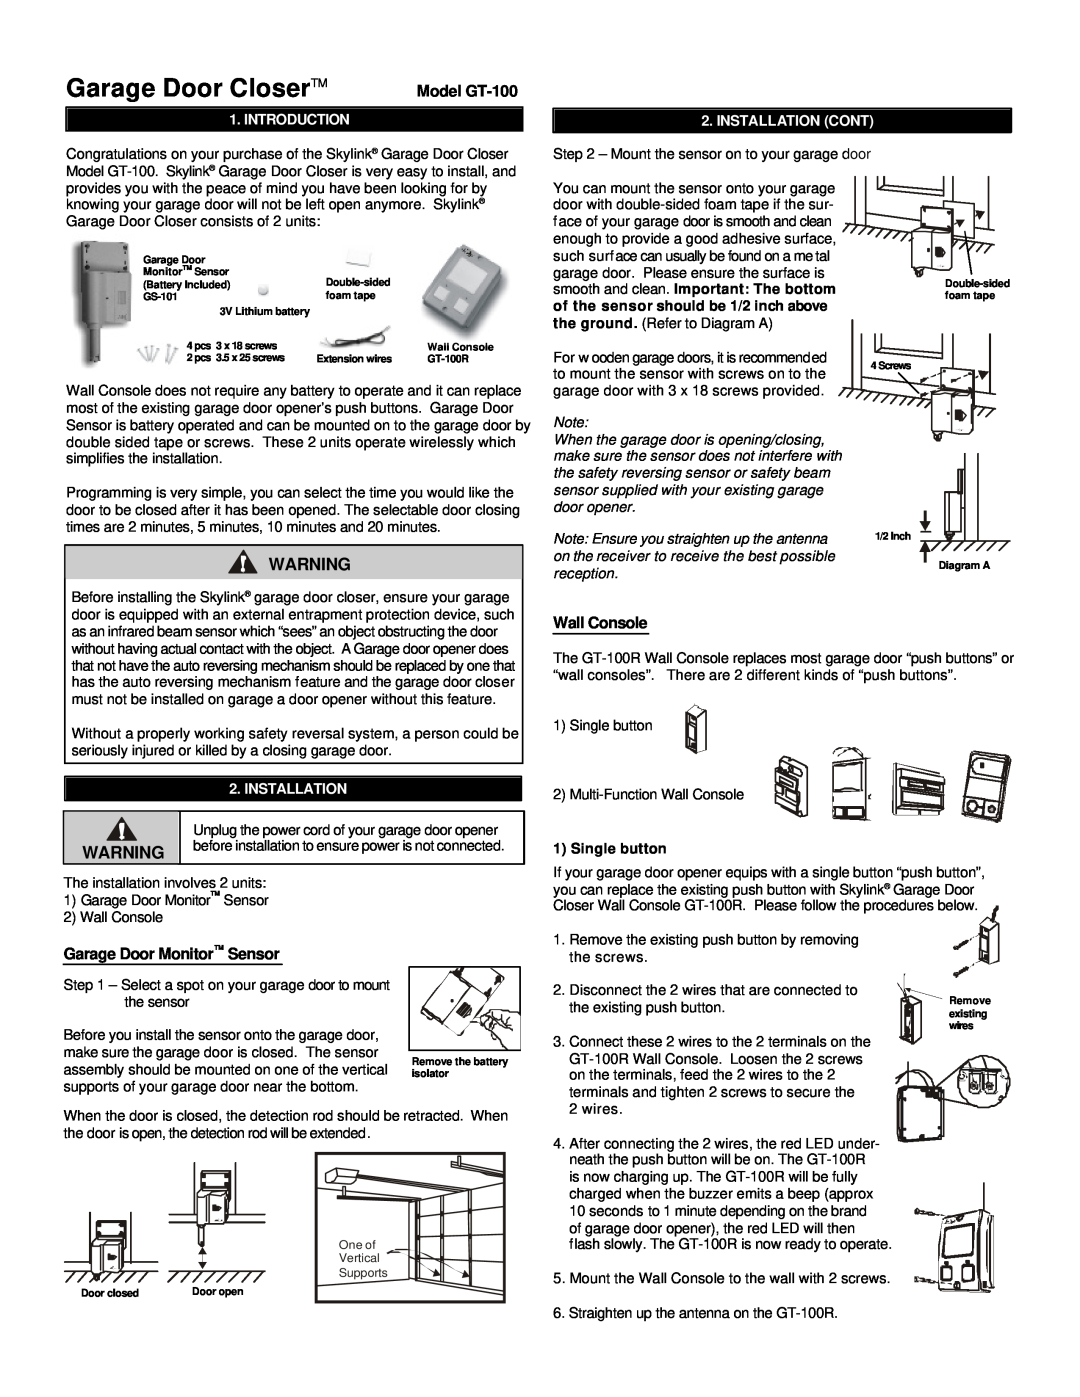 SkyLink manual Model GT-100, Wall Console, Garage Door MonitorTM Sensor, Introduction, Installation Cont, reception 